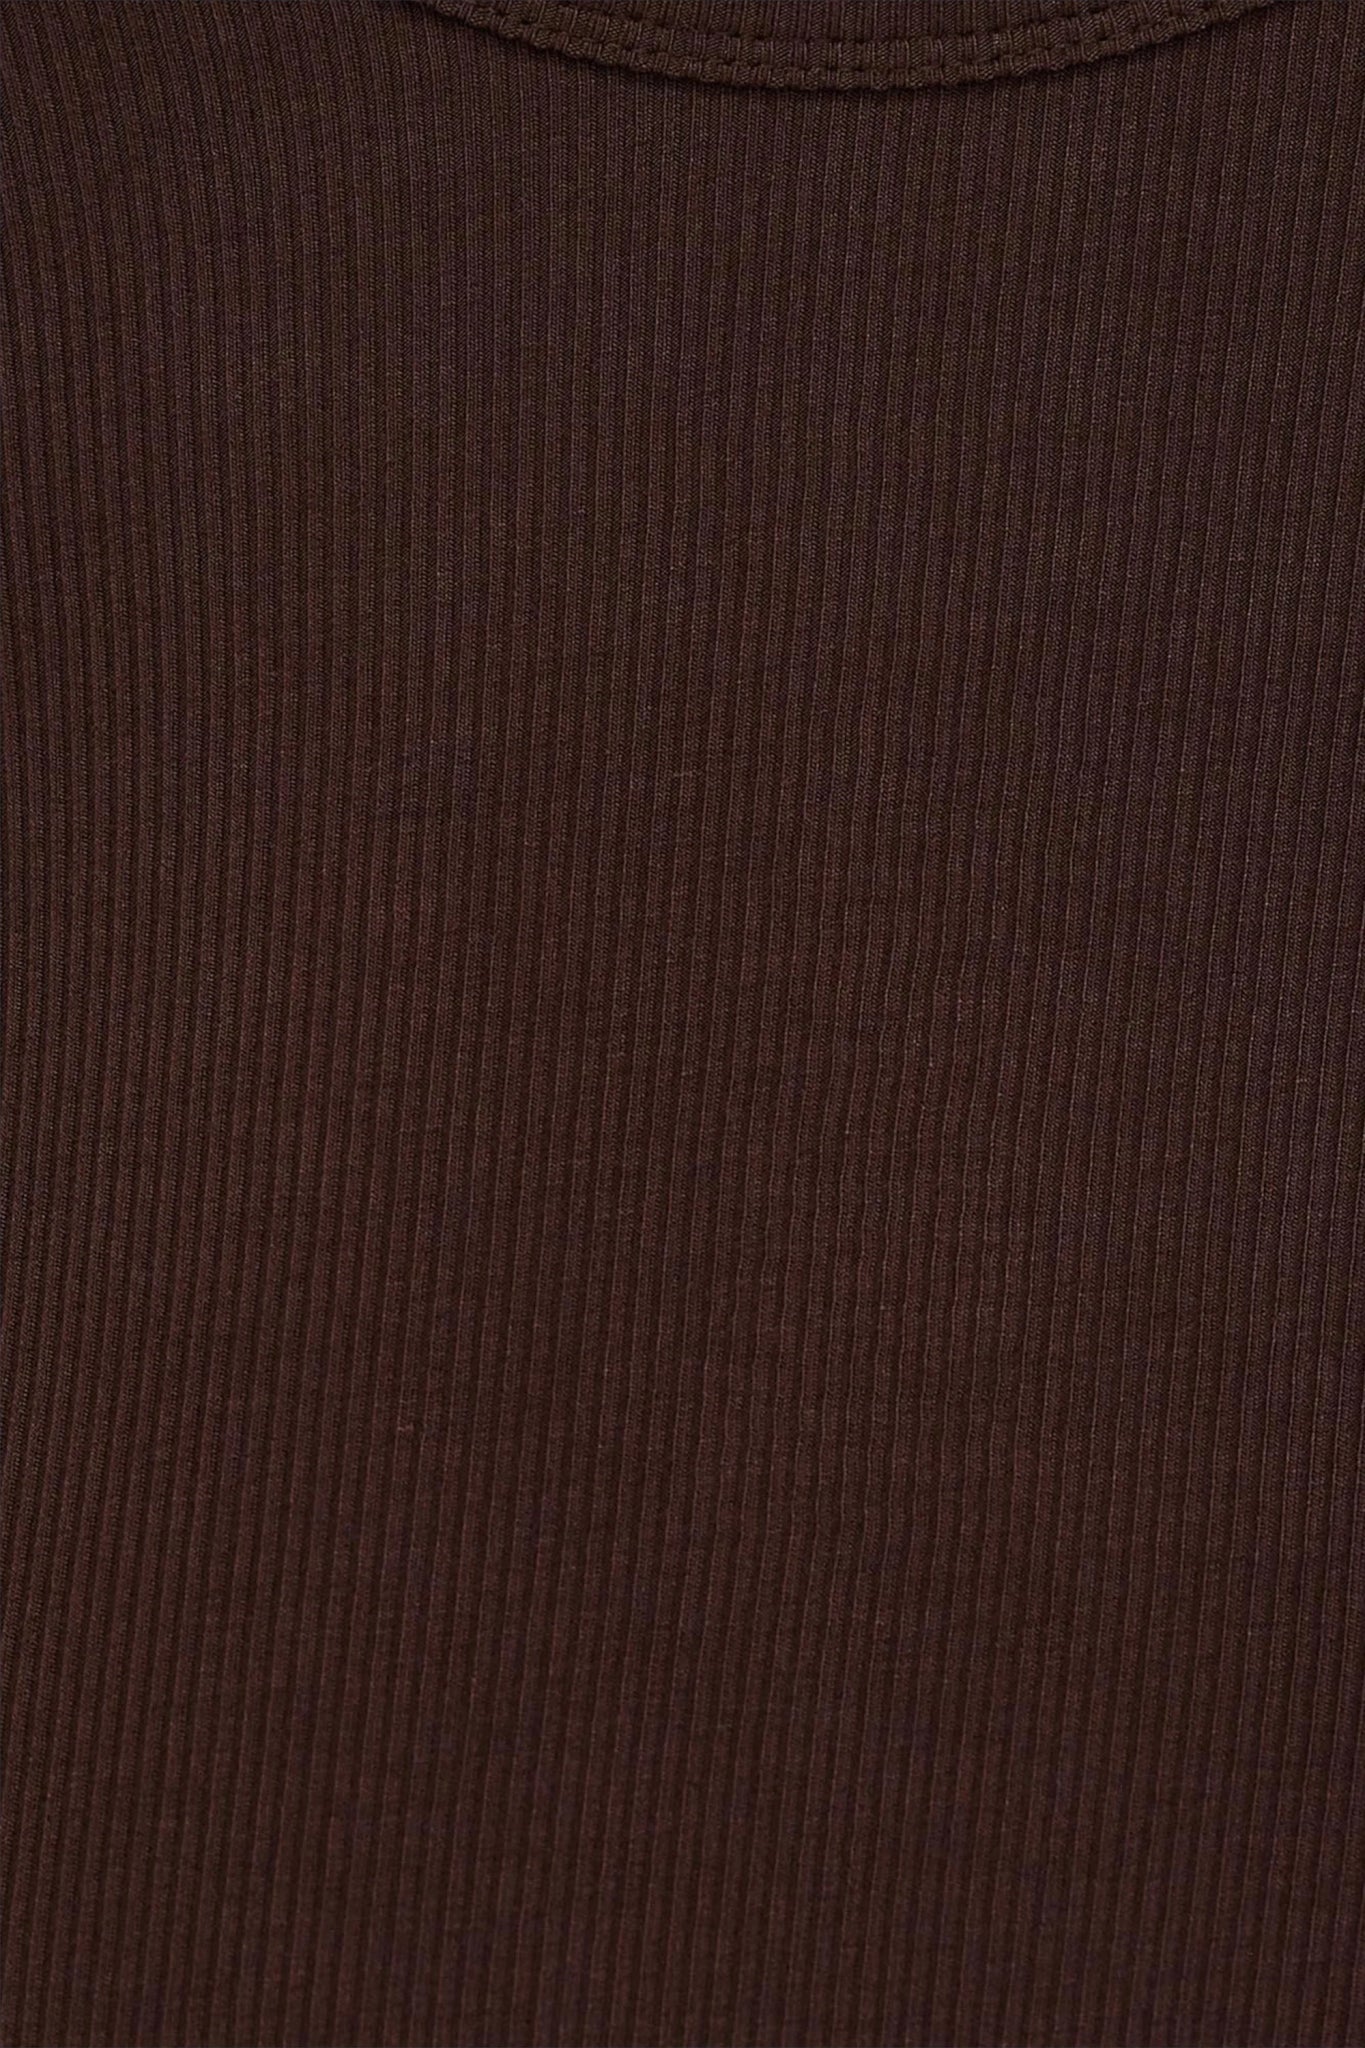 Rib Cotton Bodysuit (Chocolate) - All Fenix